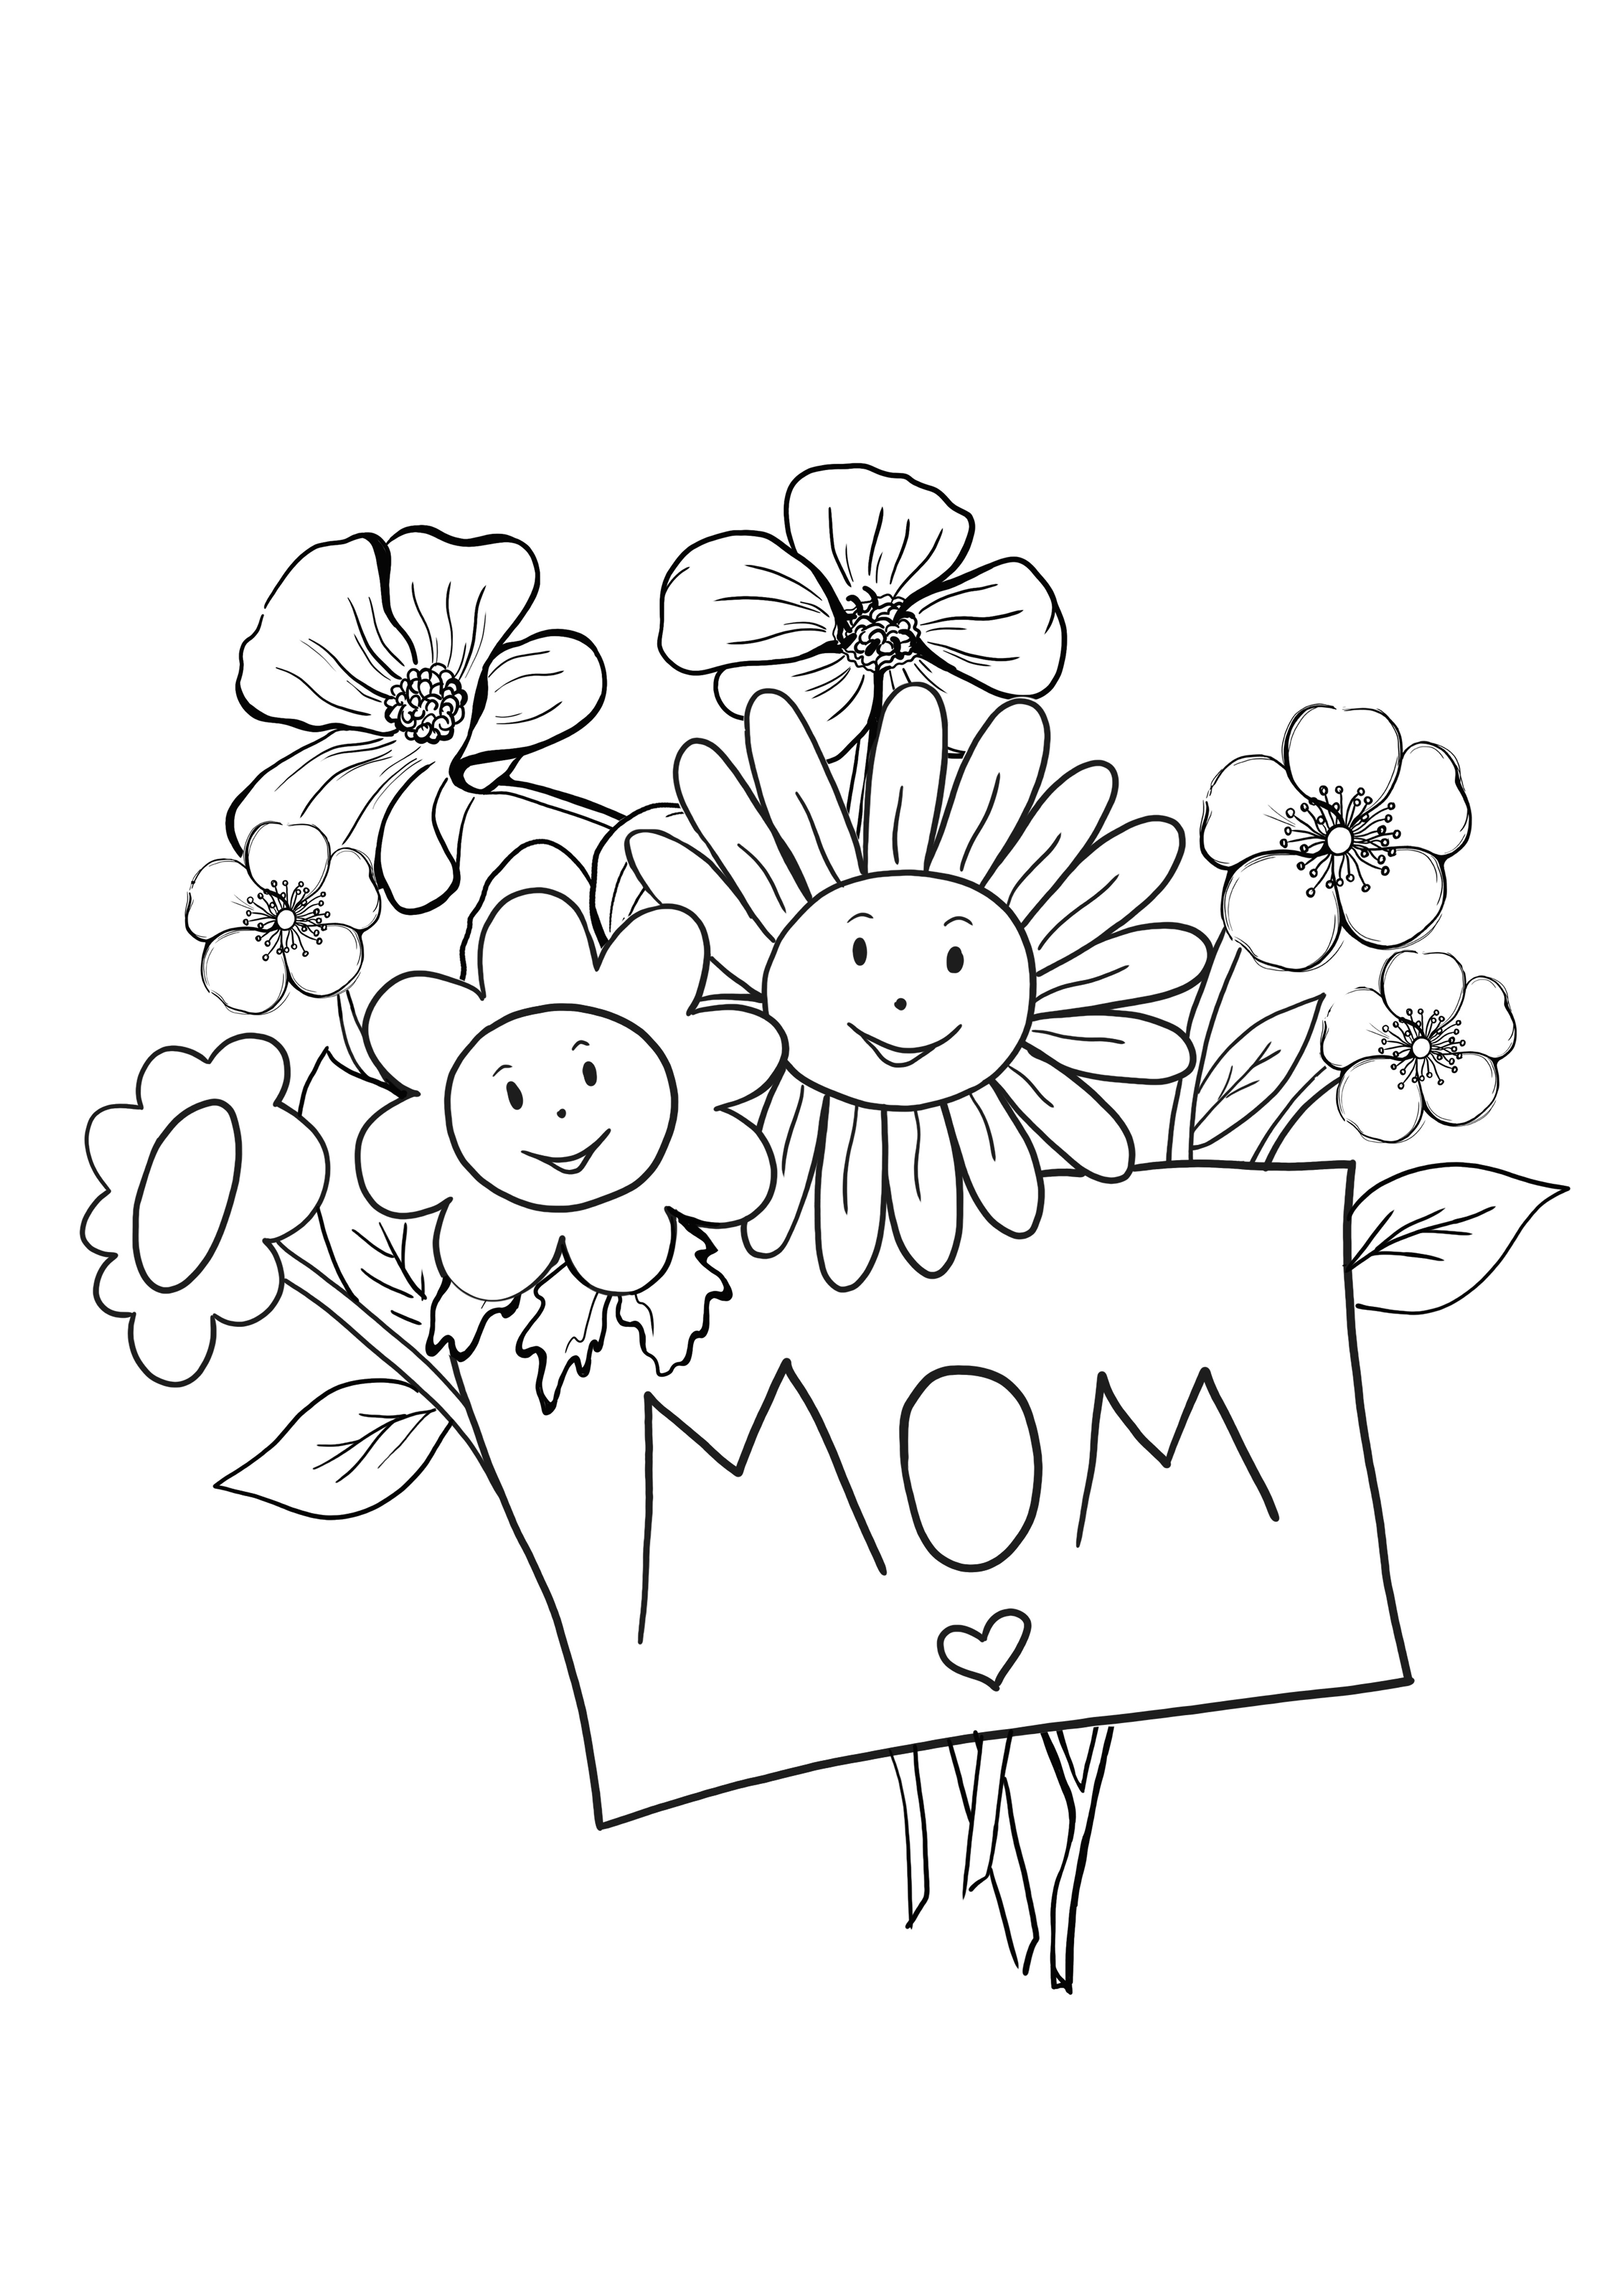 flores y mamá para colorear e imprimir gratis